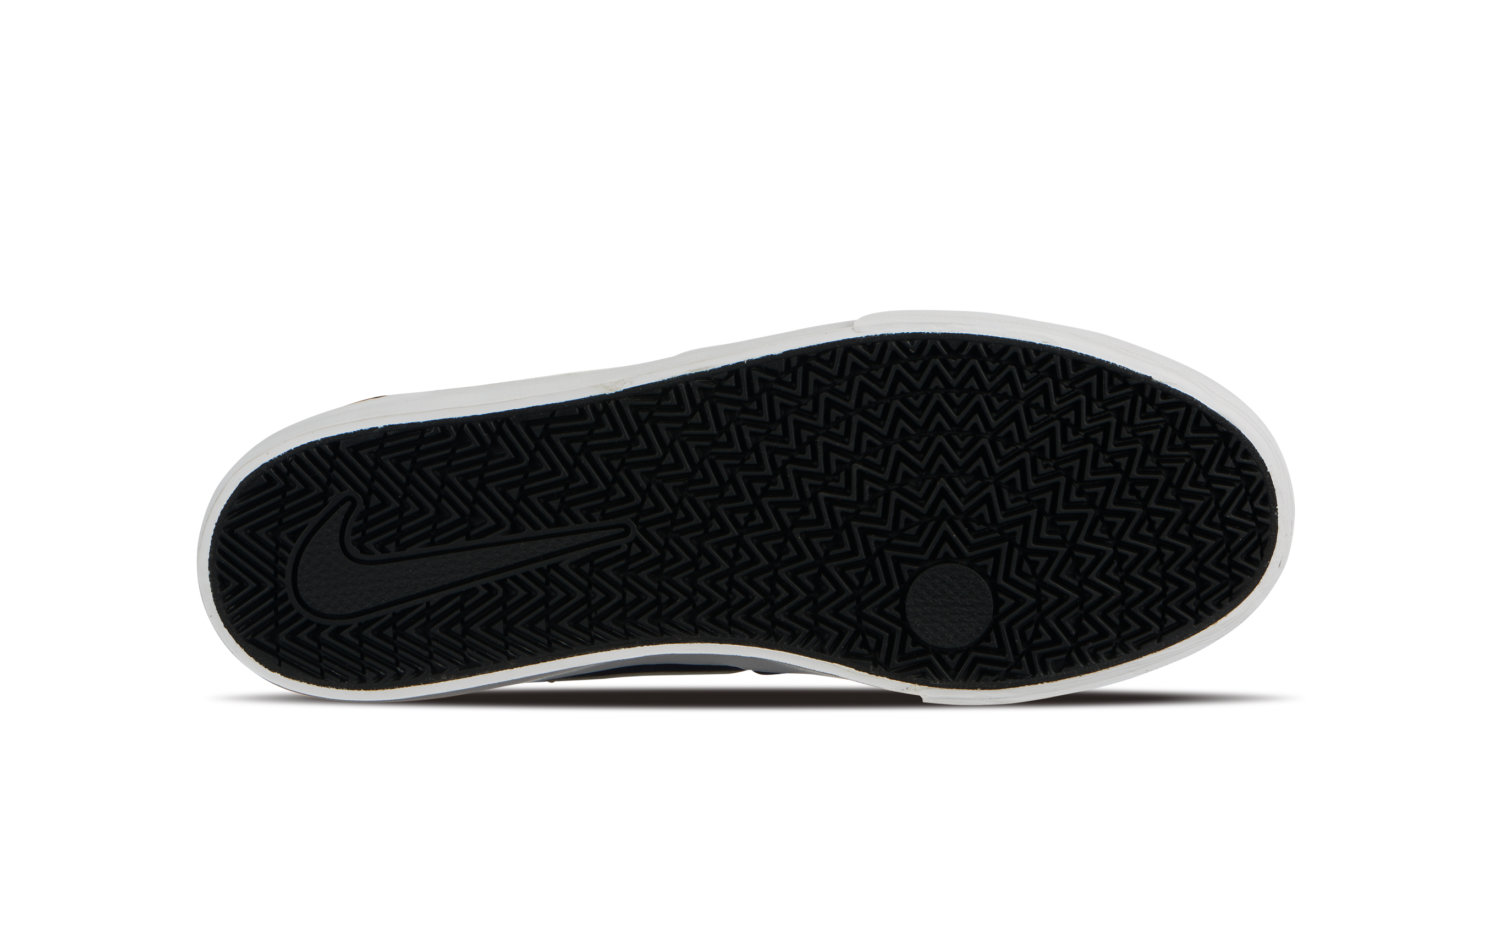 Nike SB Charge Slr Txt (CD6279-400)